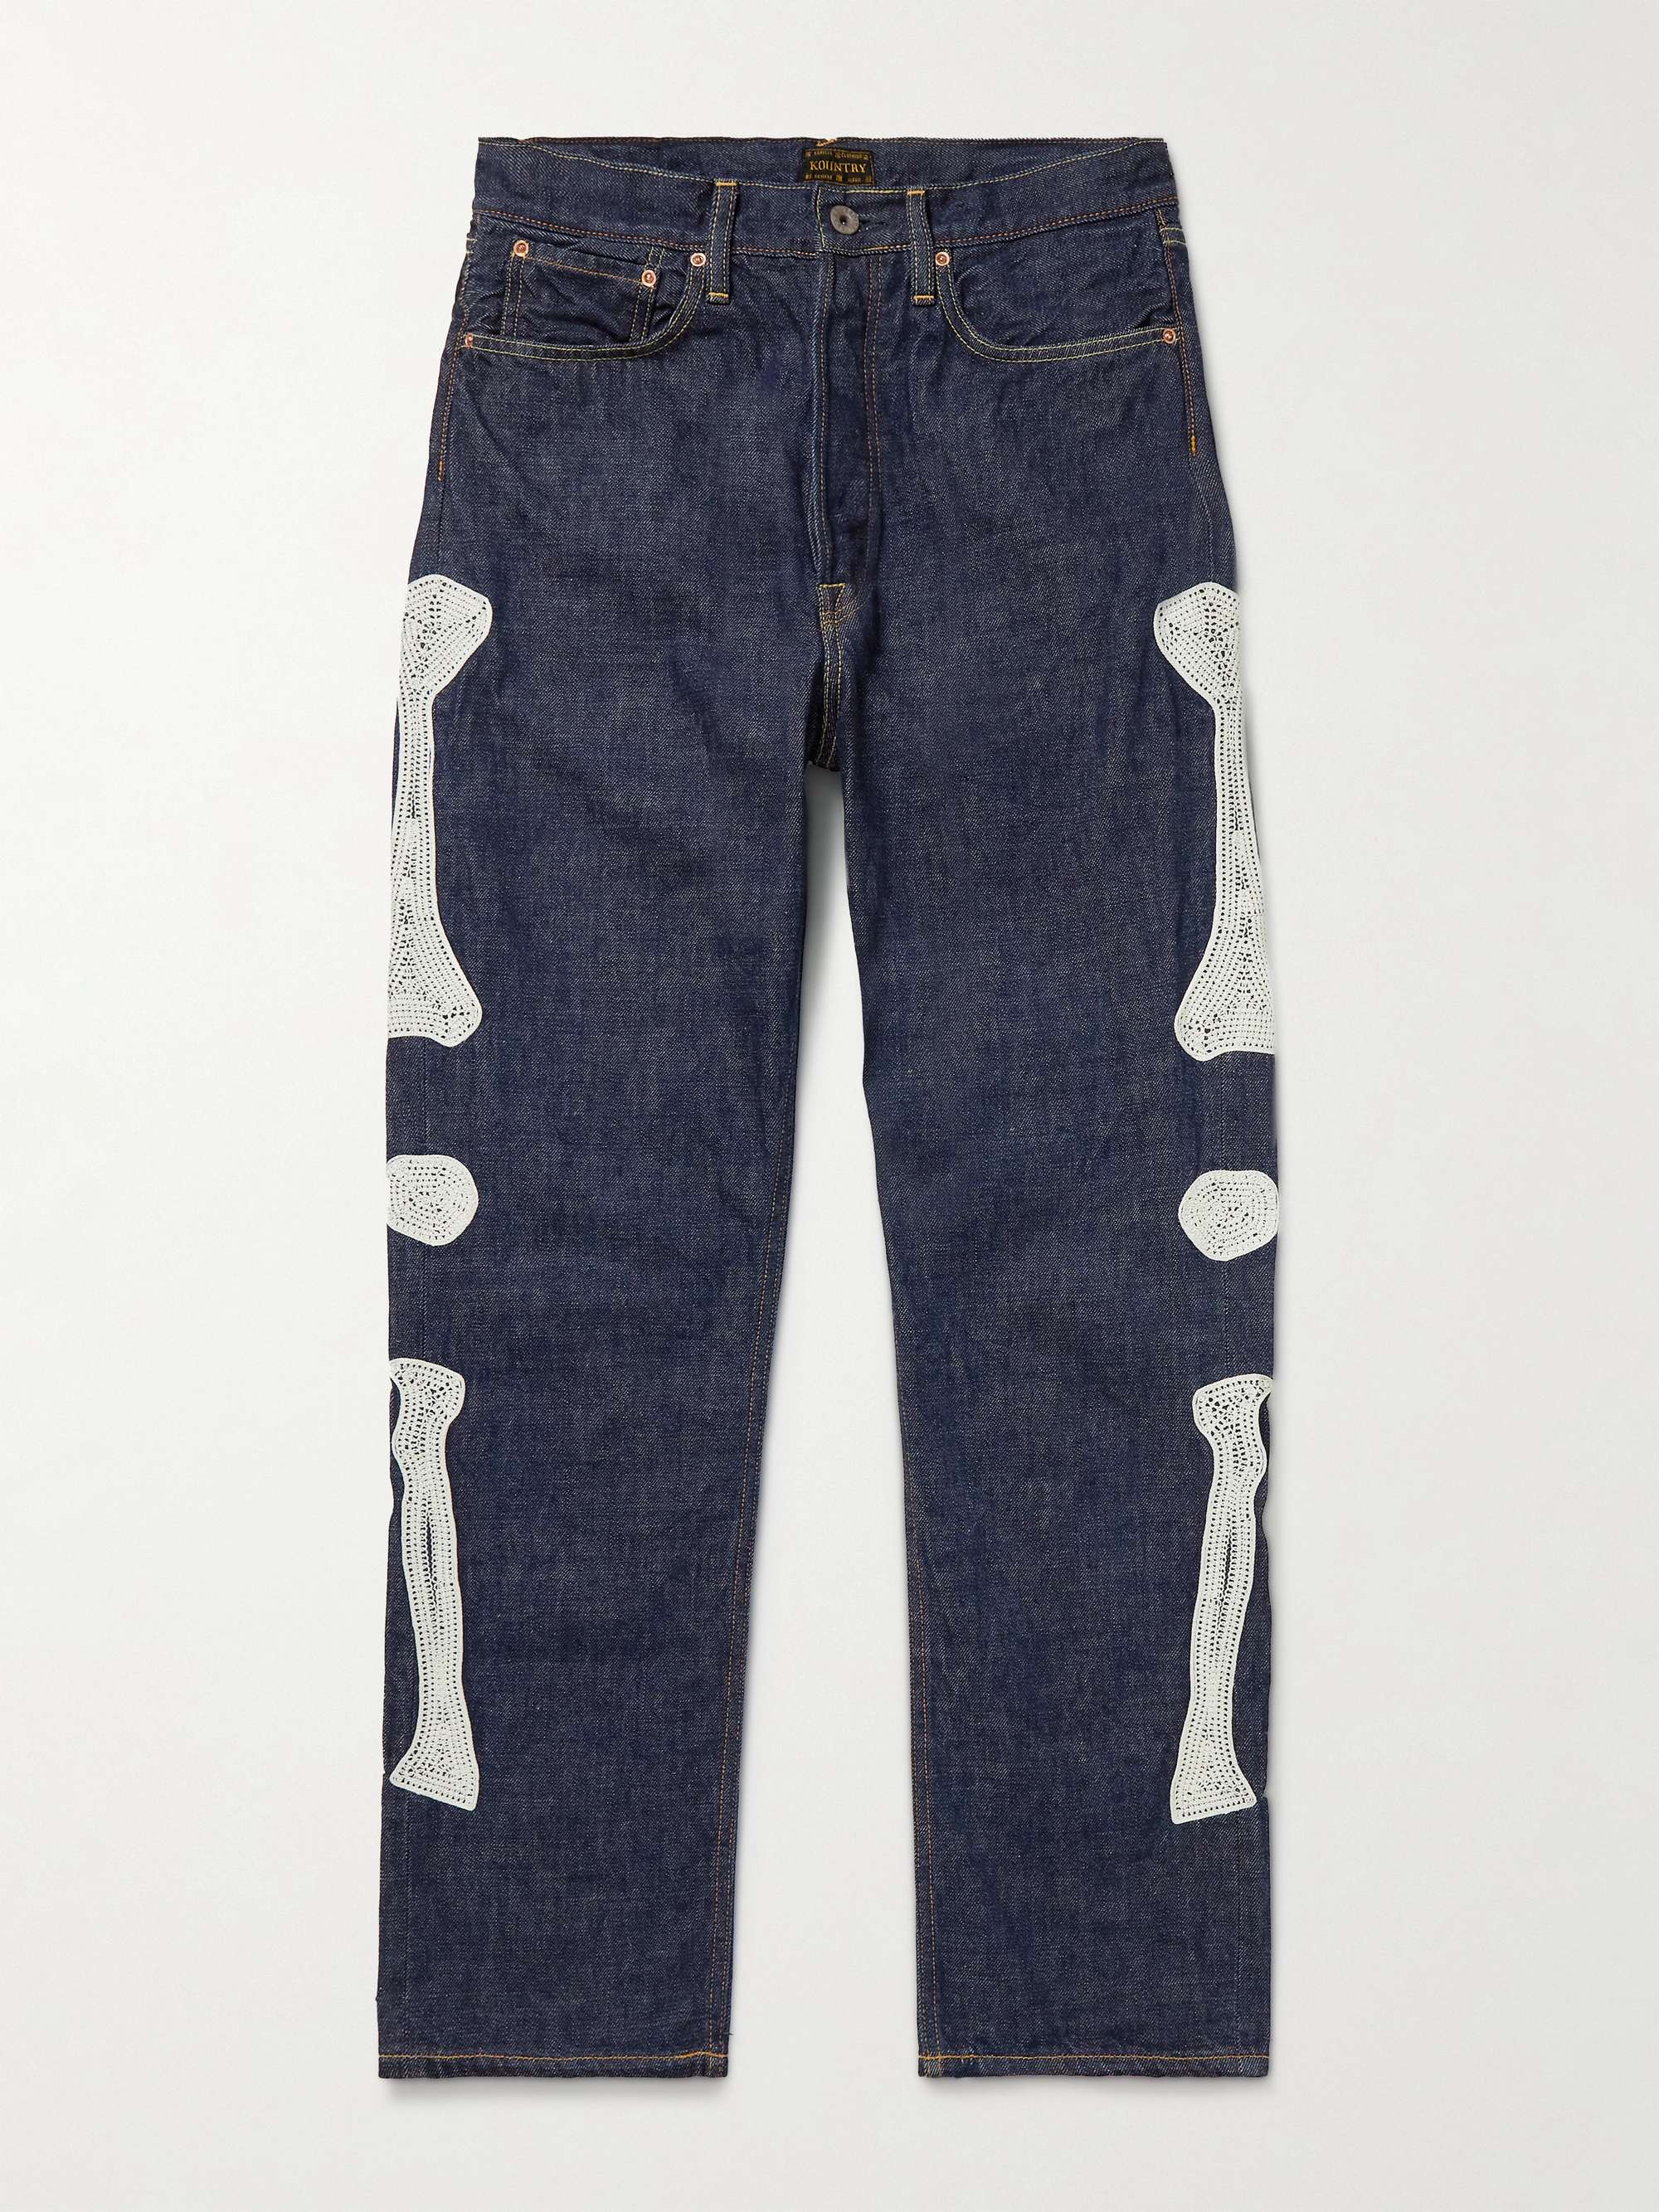 KAPITAL Embroidered Jeans for Men | MR PORTER